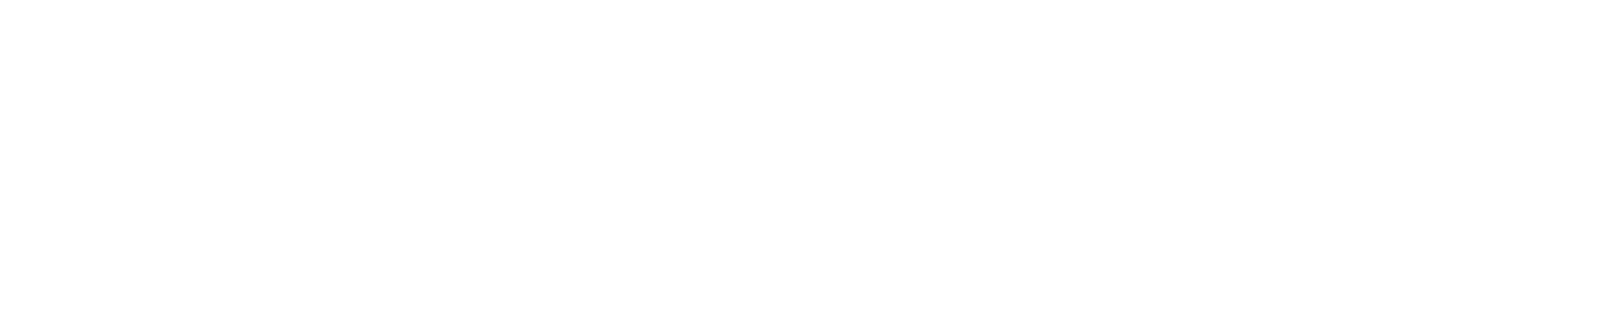 Korea Aerospace Industries logo large for dark backgrounds (transparent PNG)